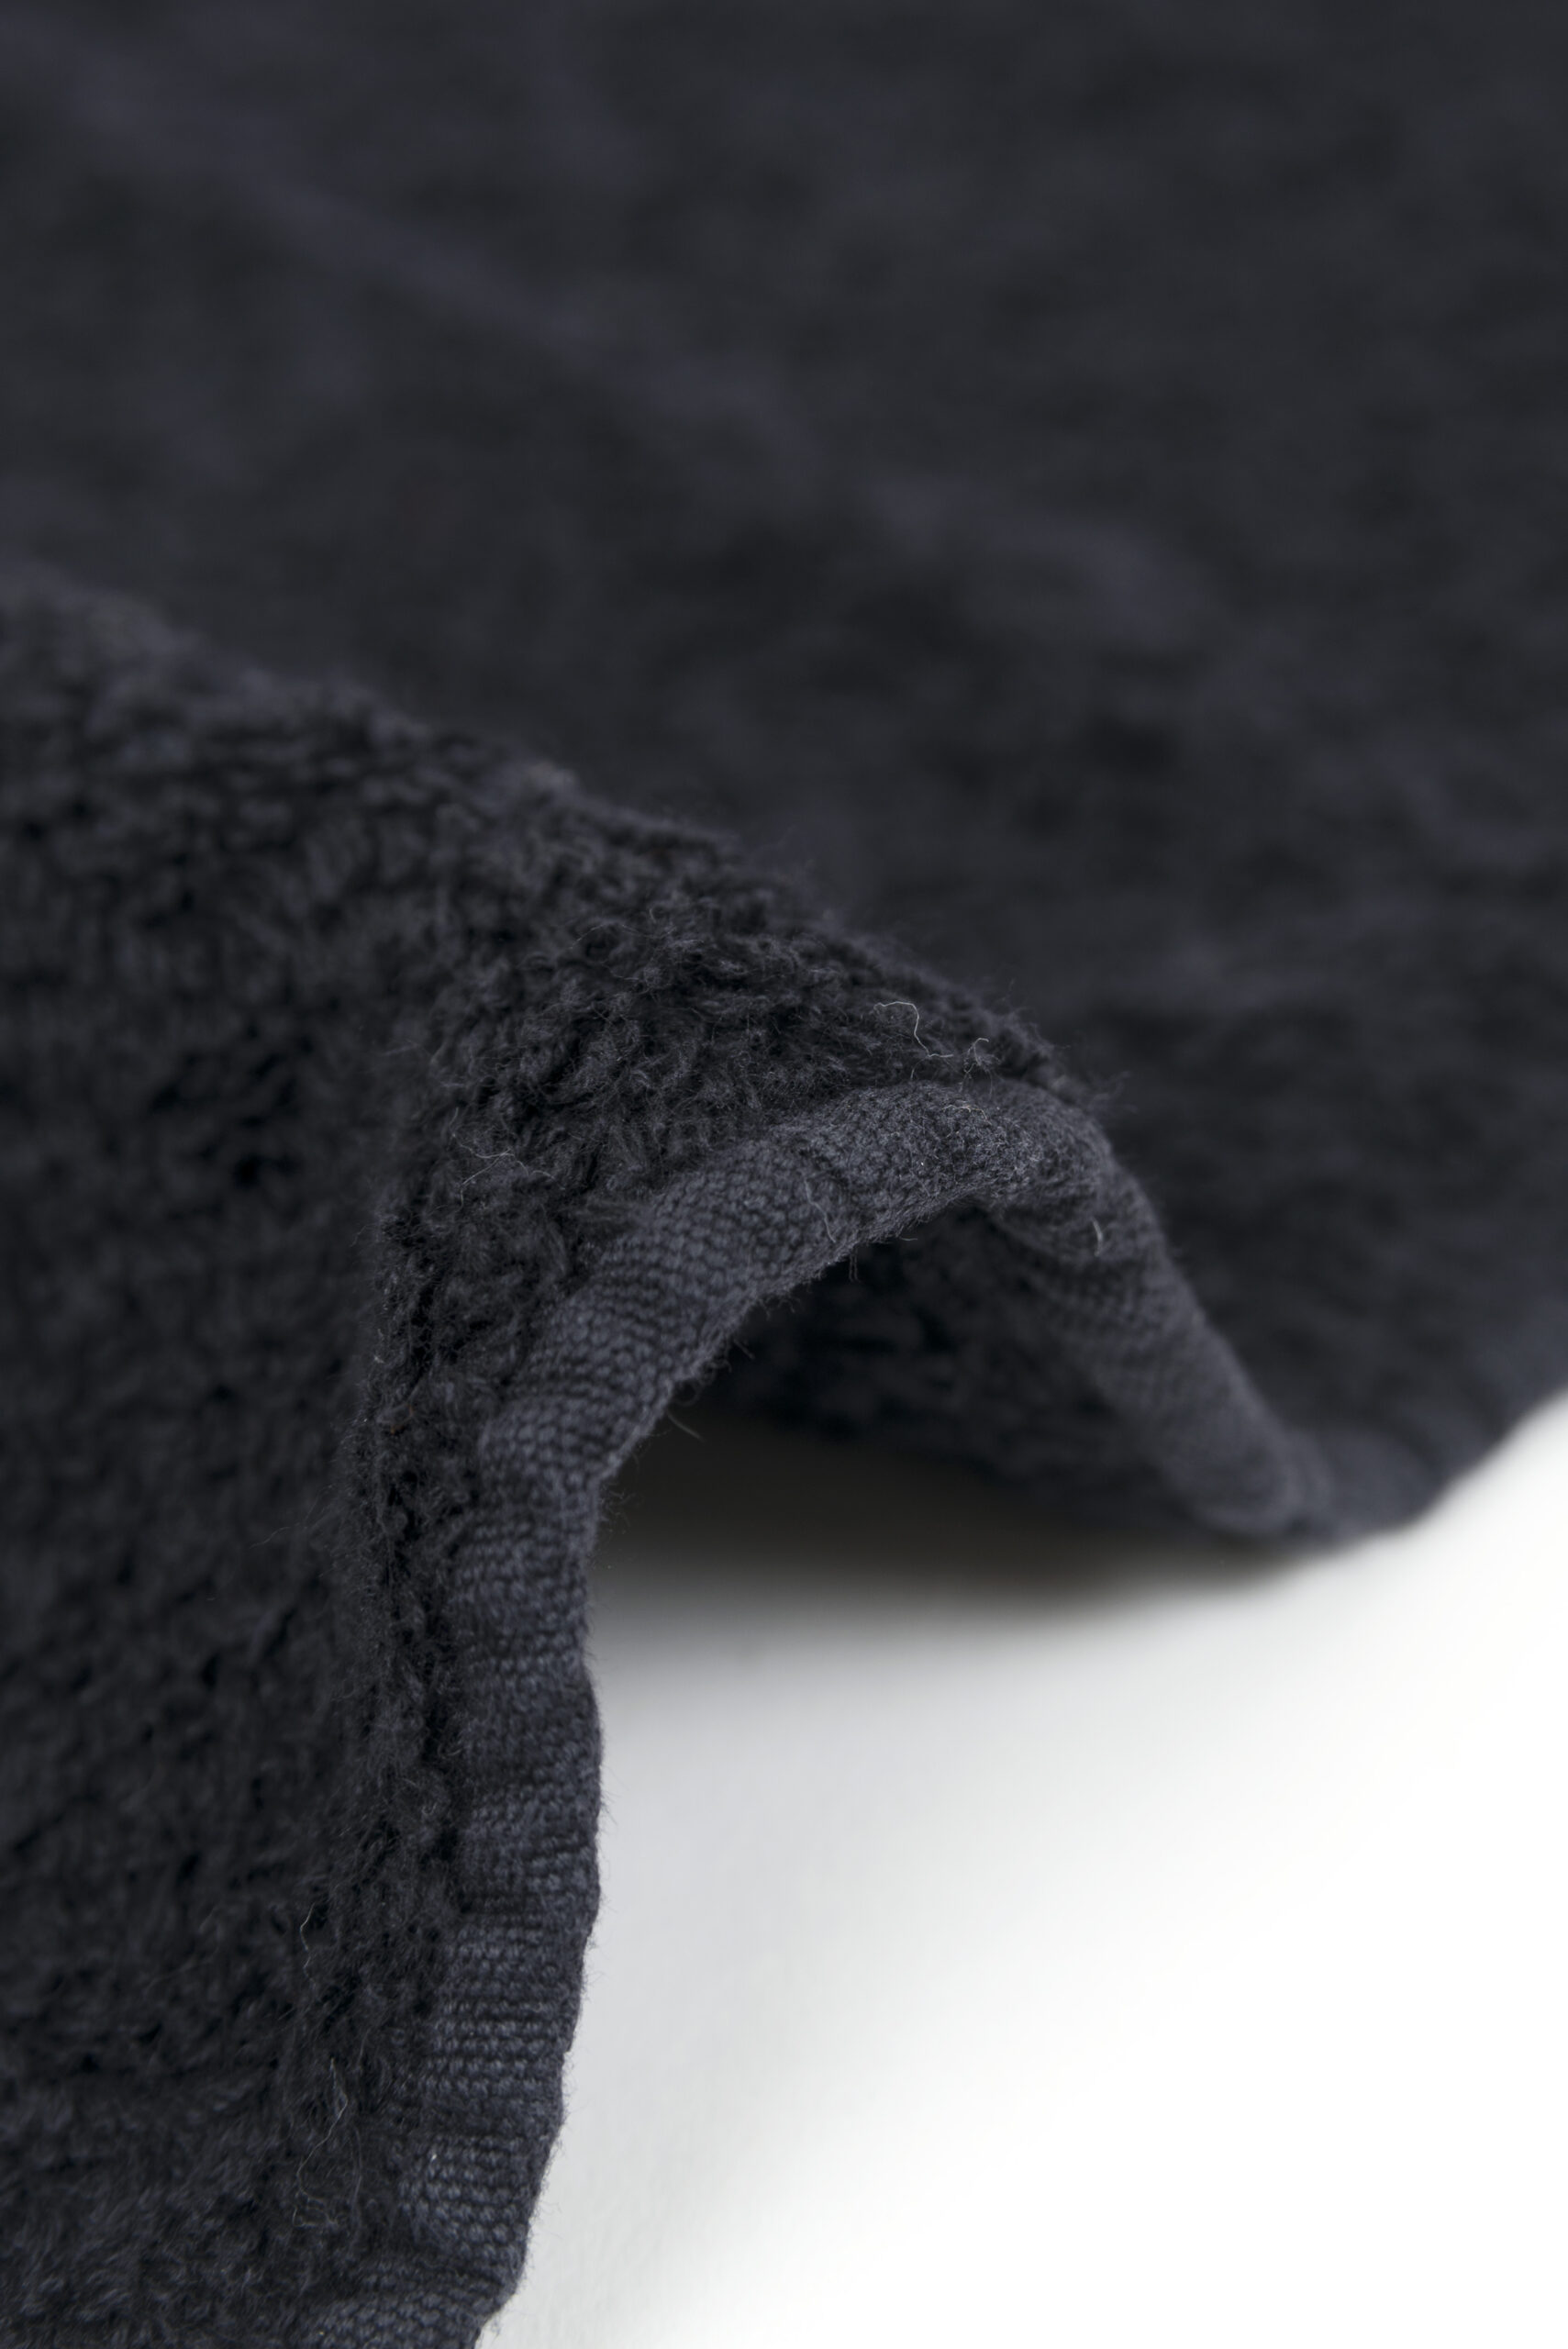 700gsm egyptian cotton black towel